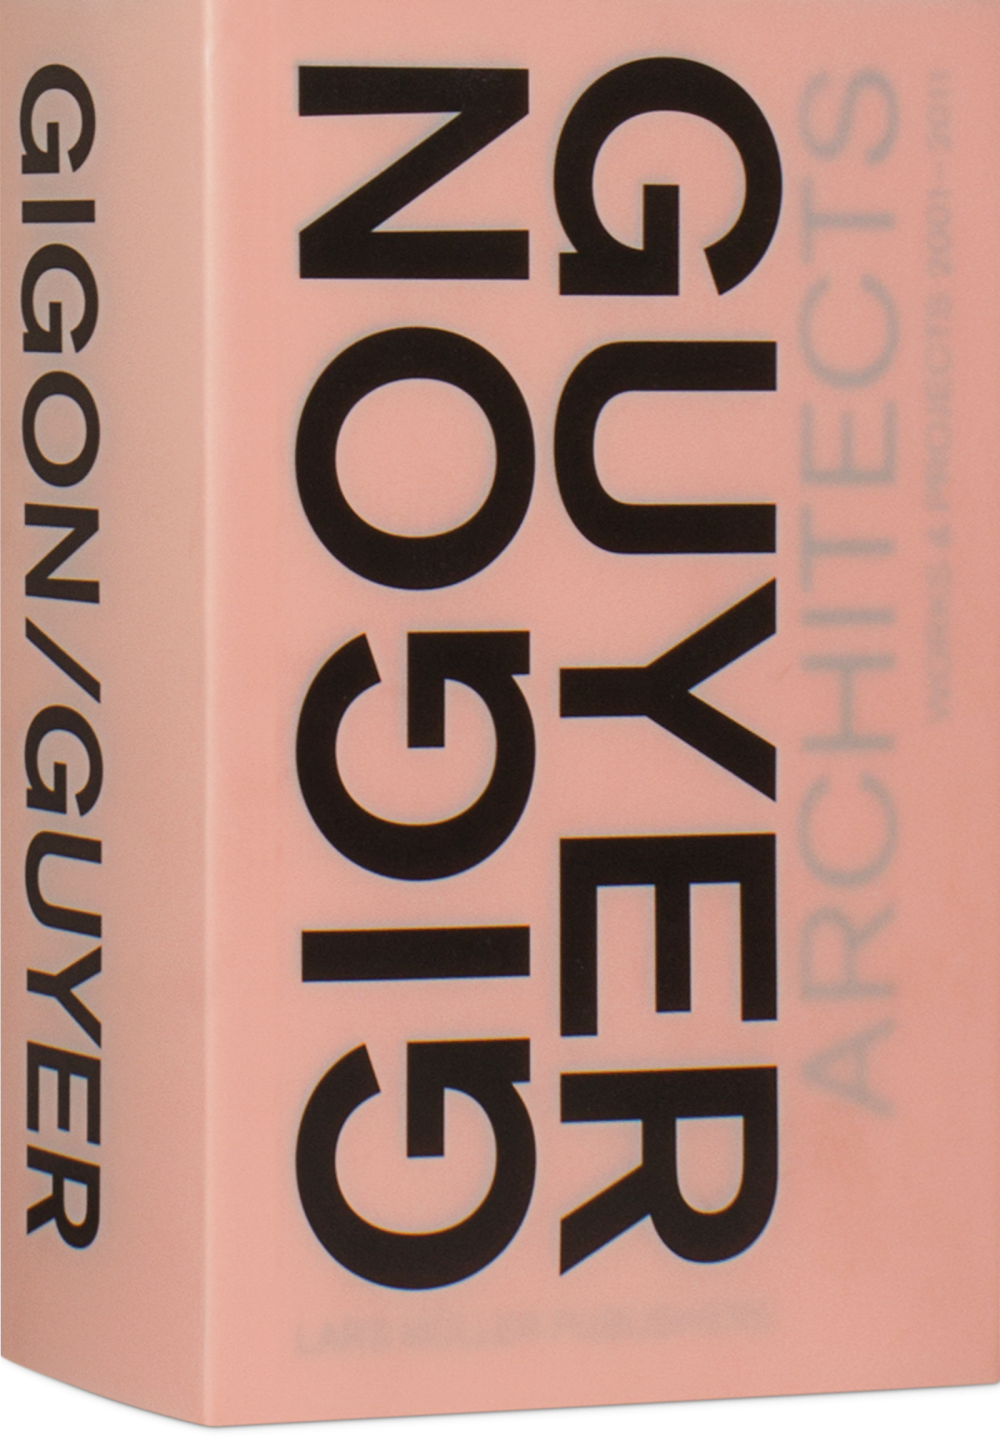 Gigon/Guyer Architects | Lars Müller Publishers